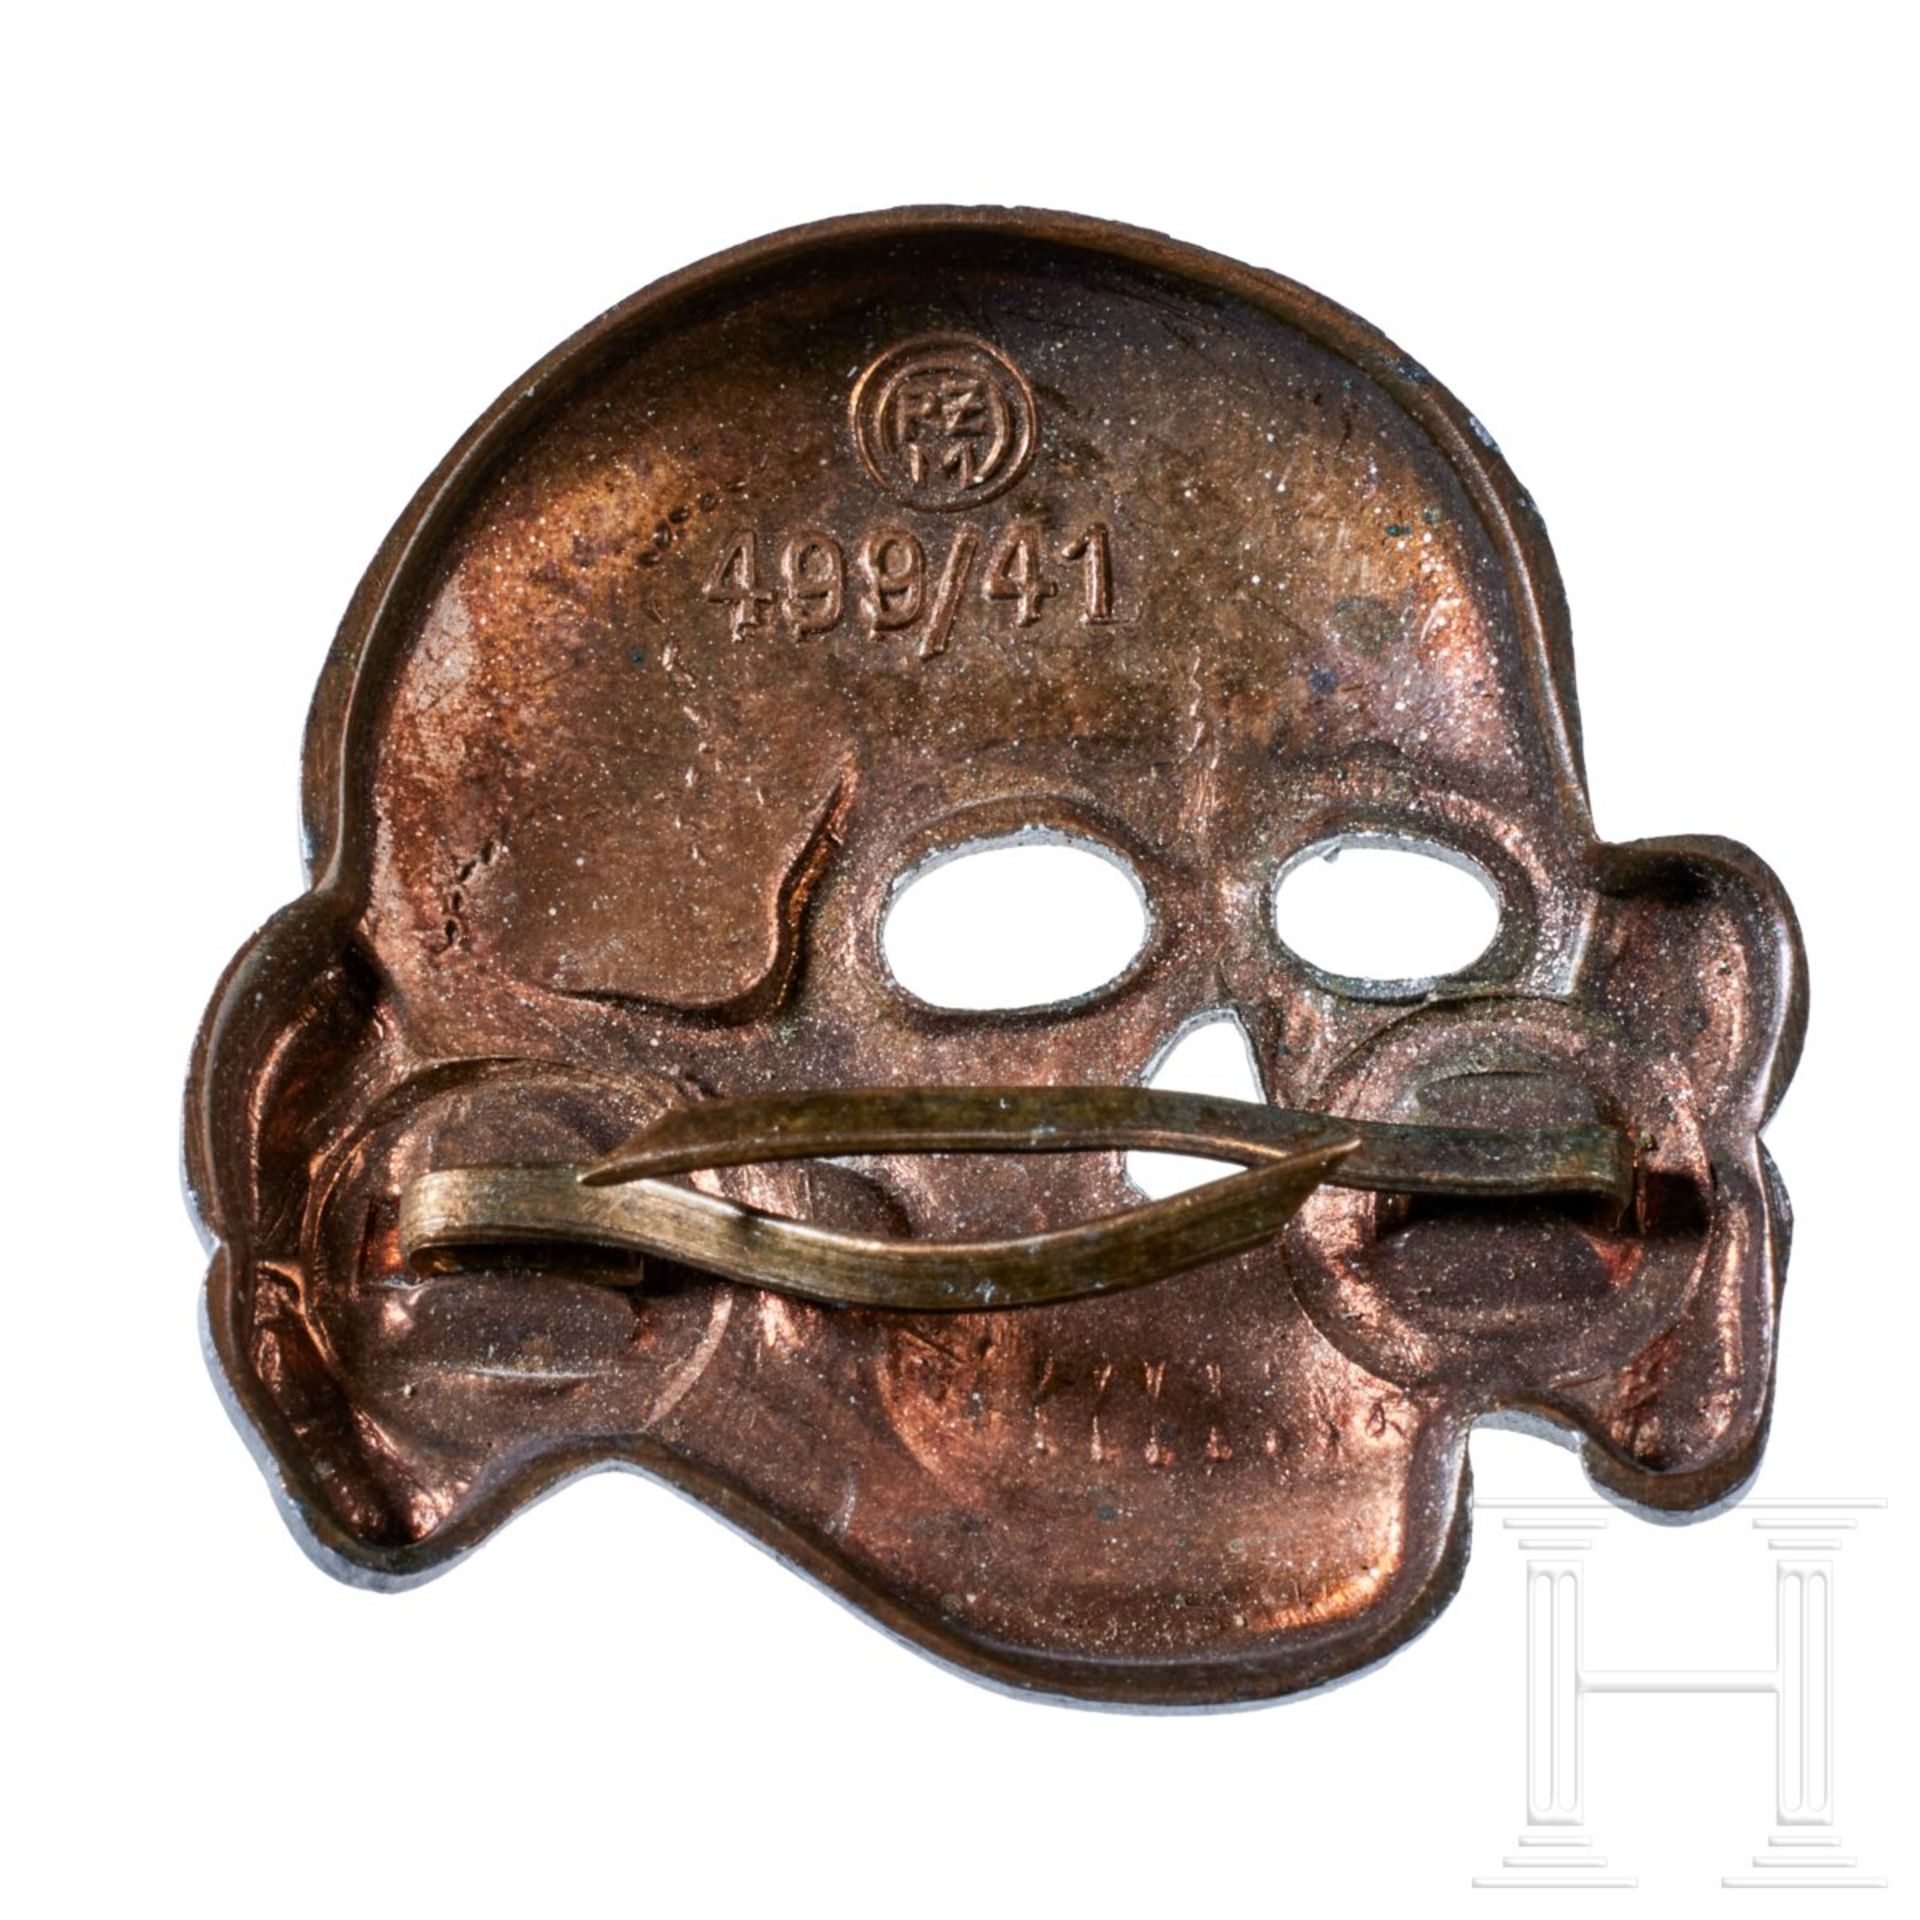 A SS visor cap Skull - Image 2 of 3